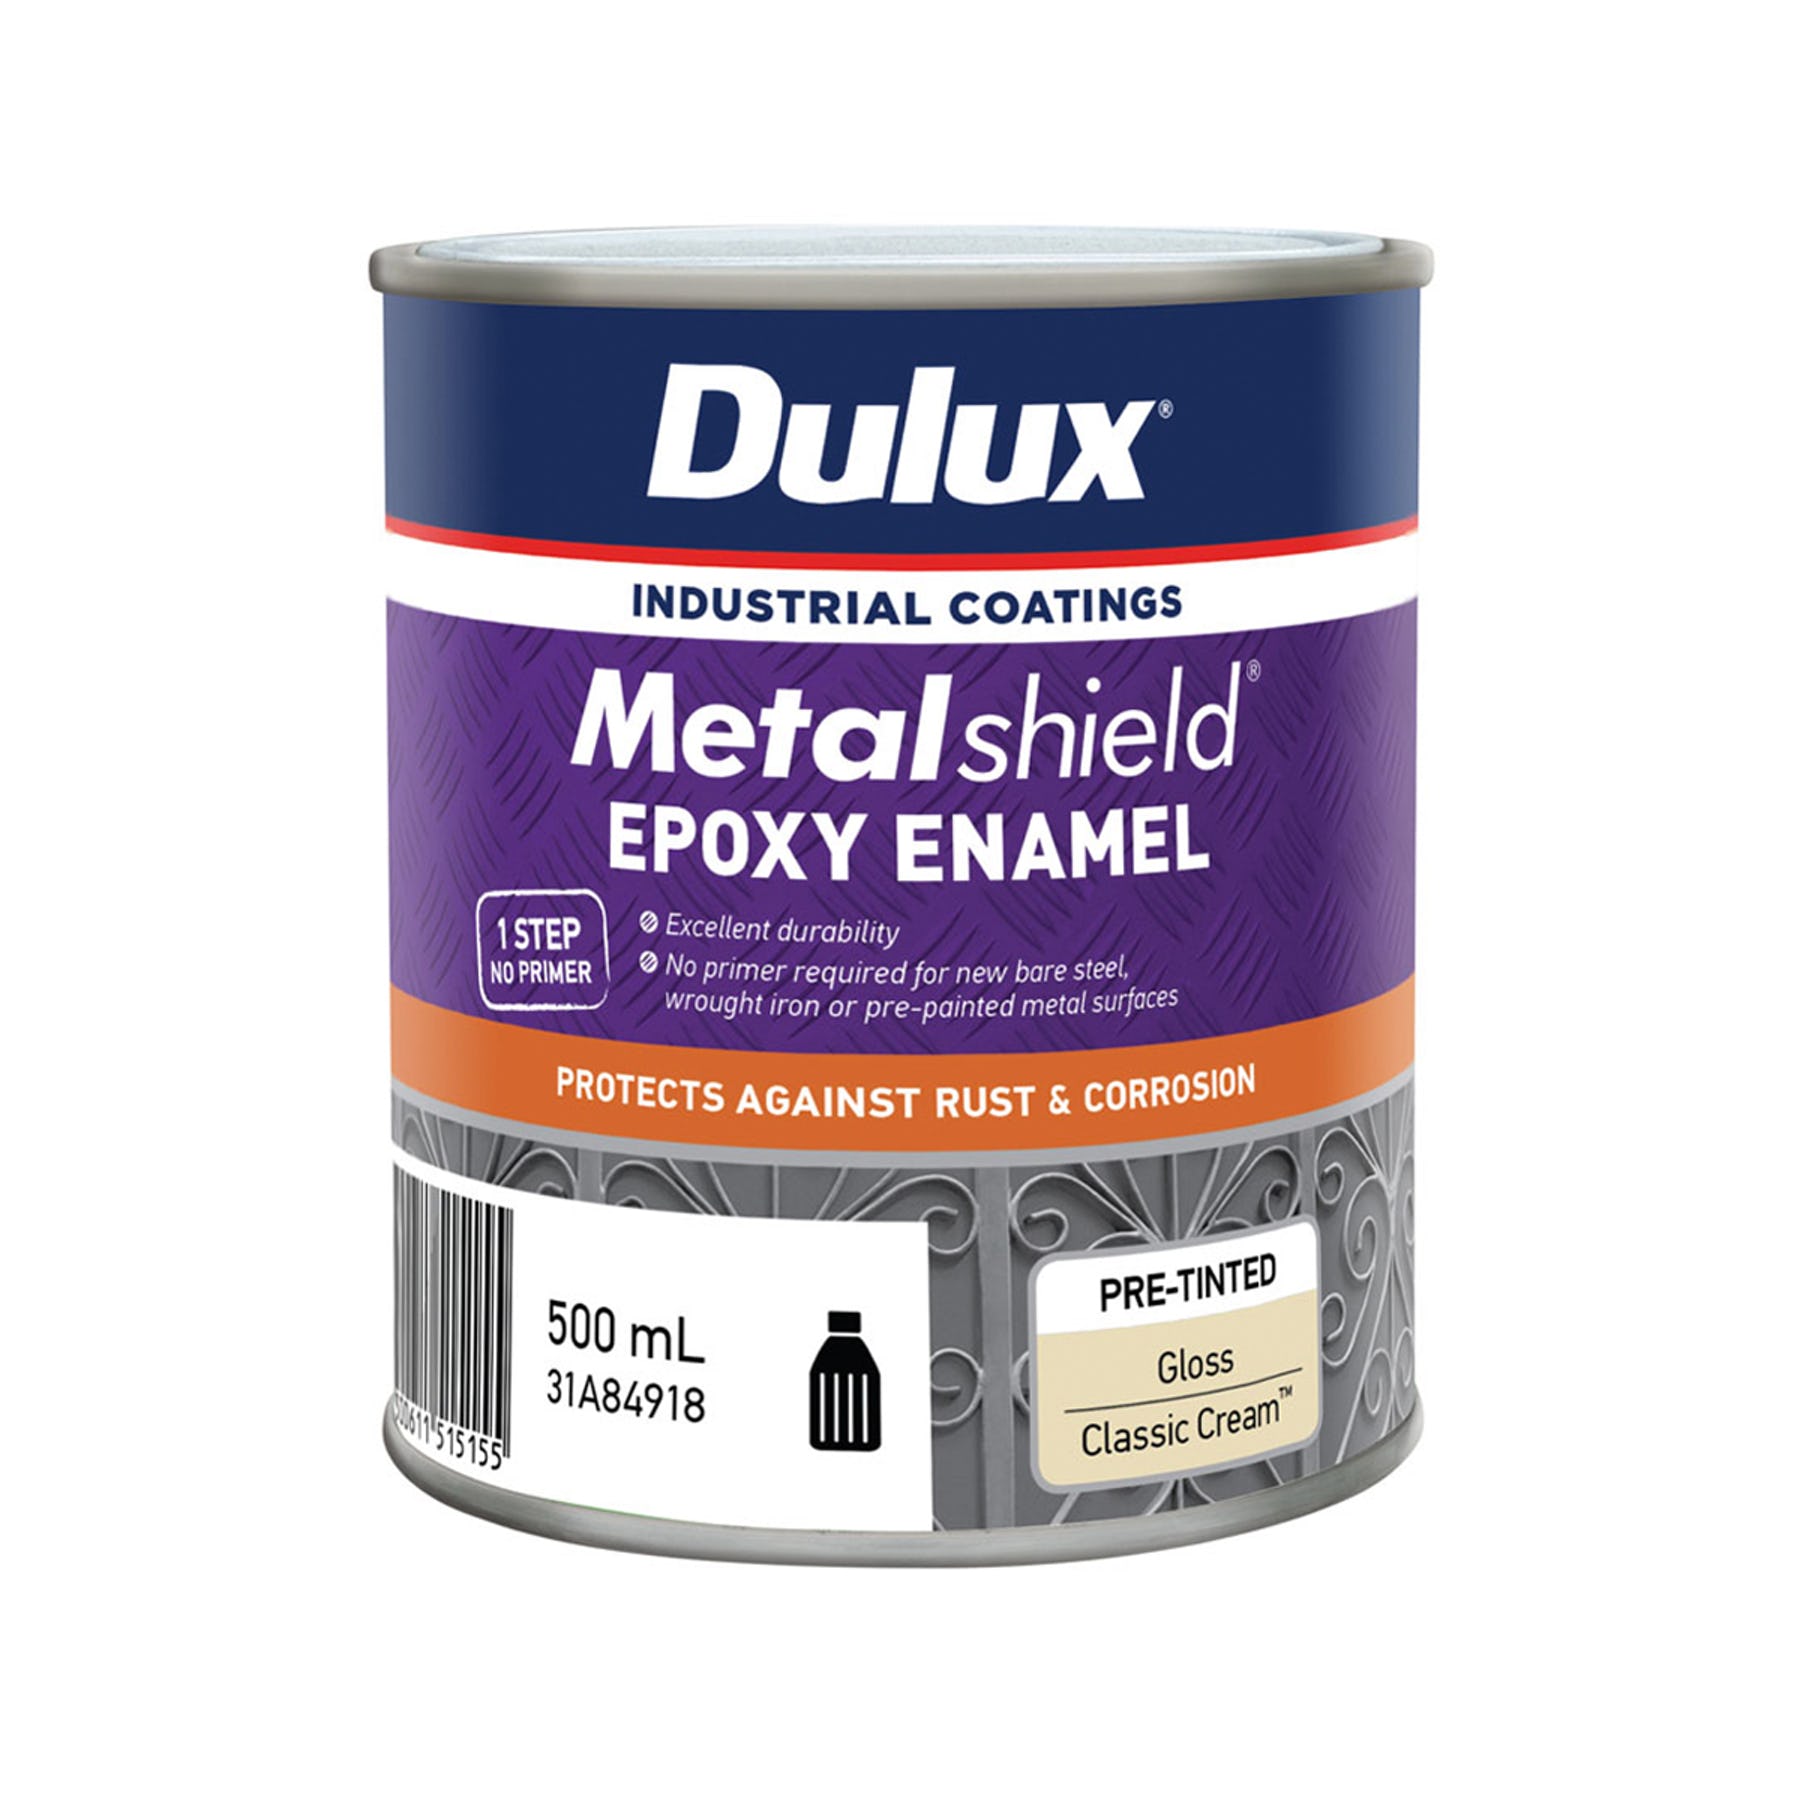 Dulux Metalshield Epoxy Enamel